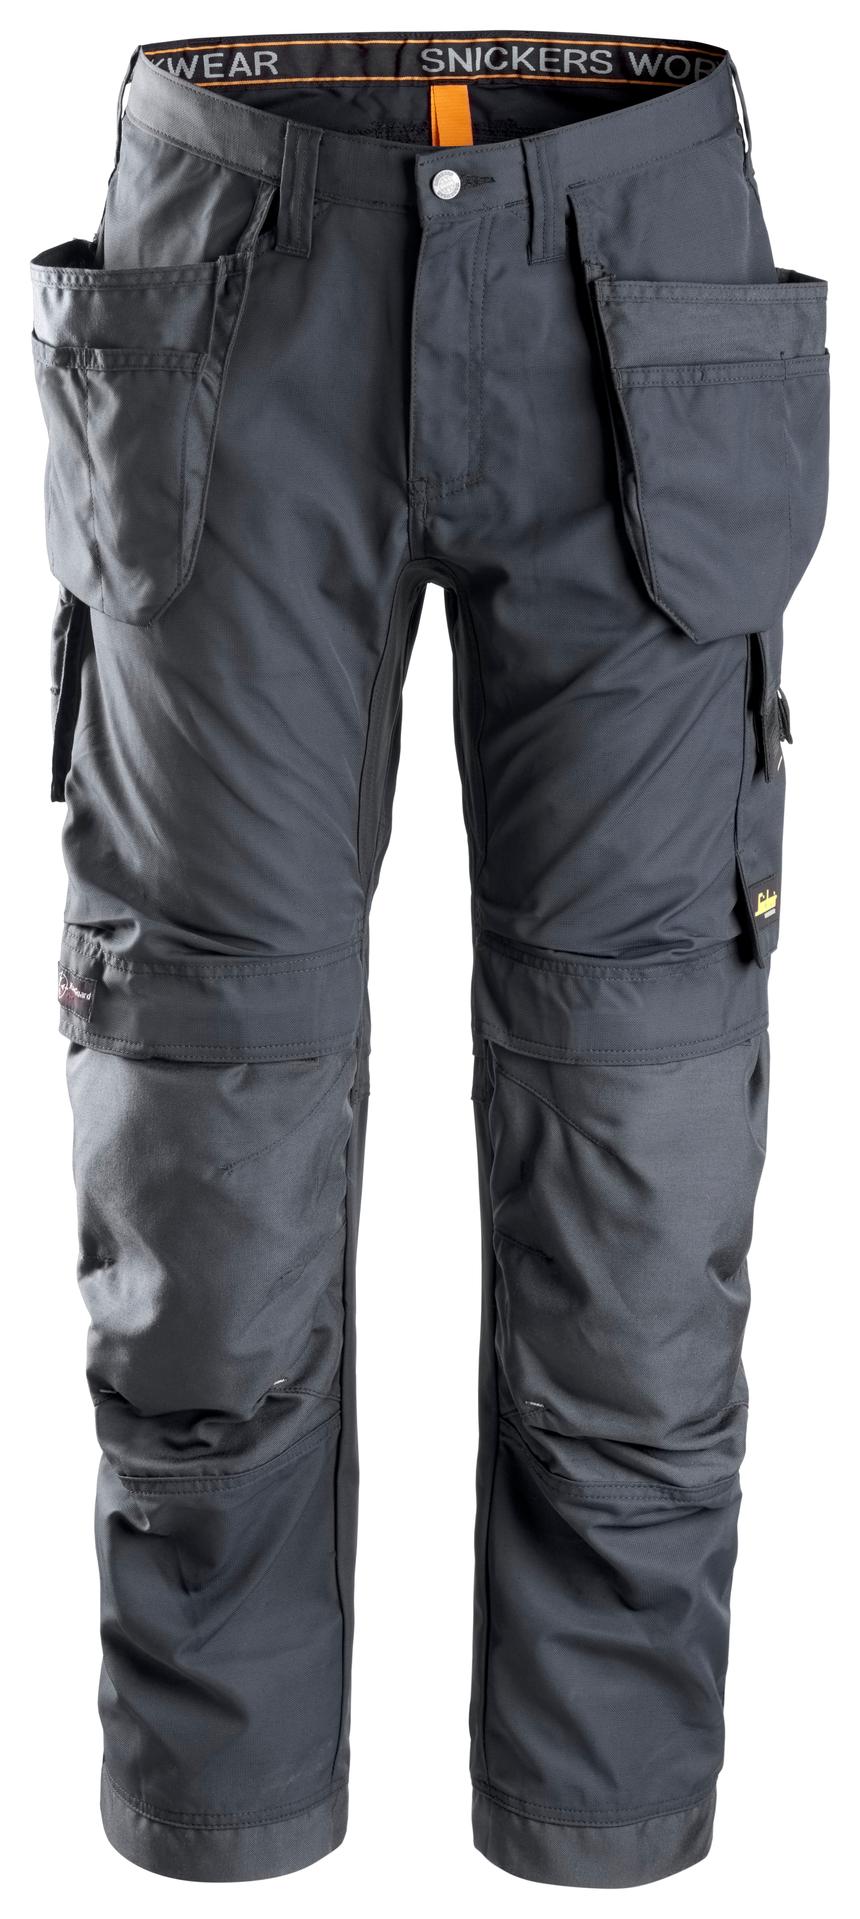 Men Pro Builder Work Trousers Black & Grey Heavy Duty Safety Combat Cargo  Pants. - Helia Beer Co